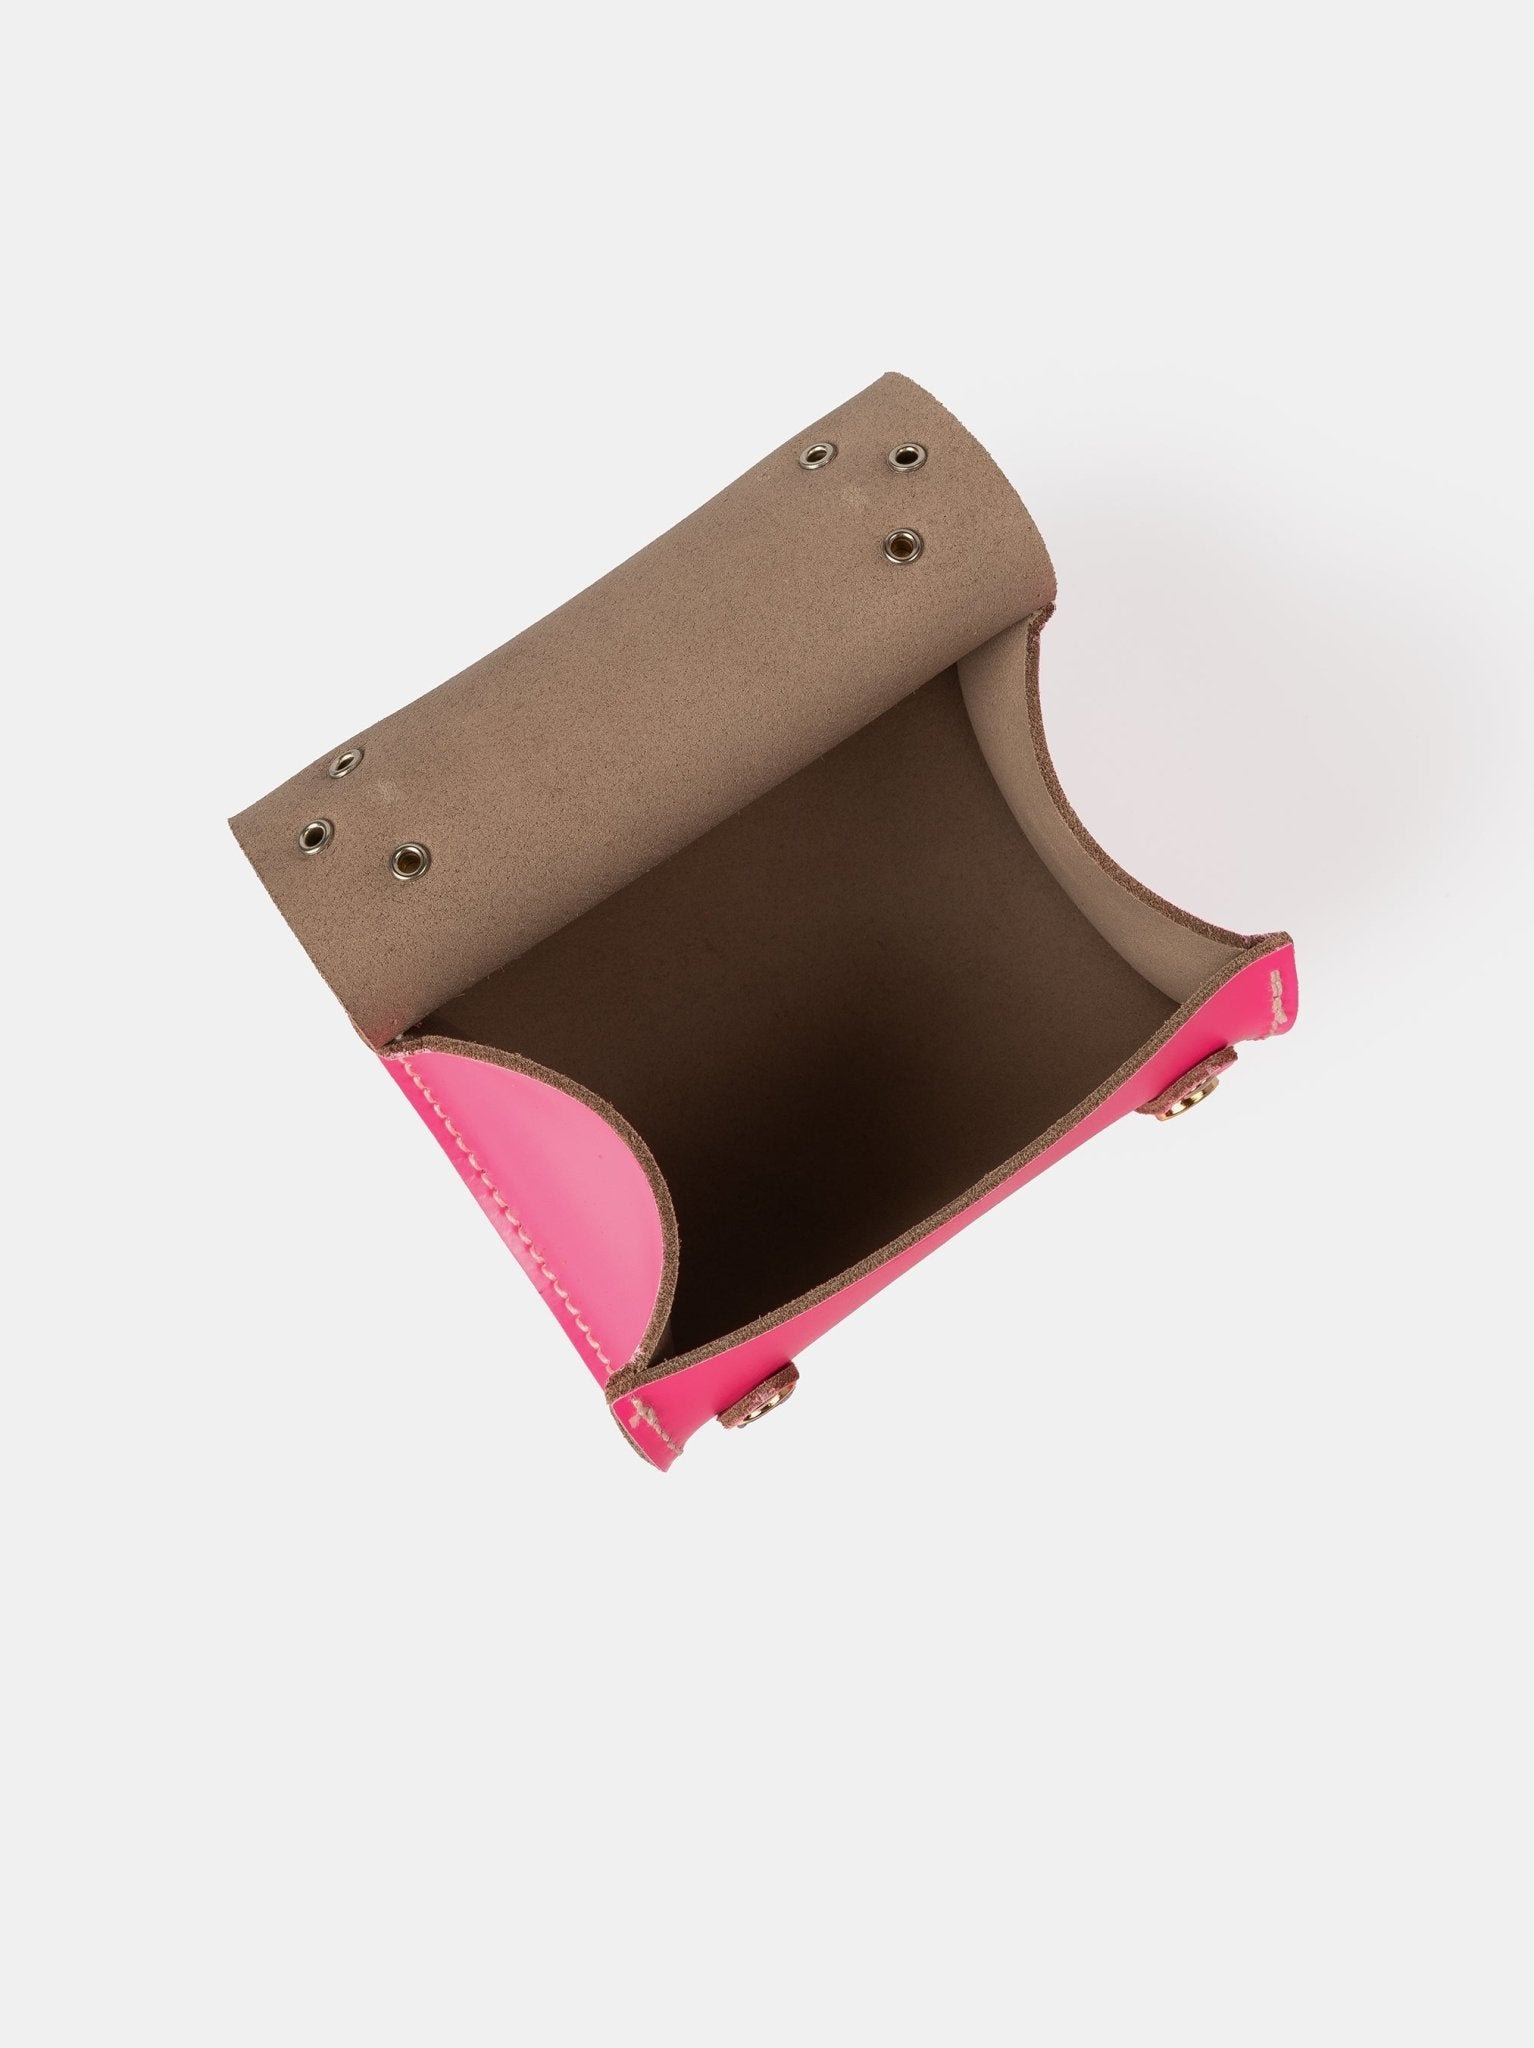 The Micro Bowls Bag - Fluoro Pink - Cambridge Satchel